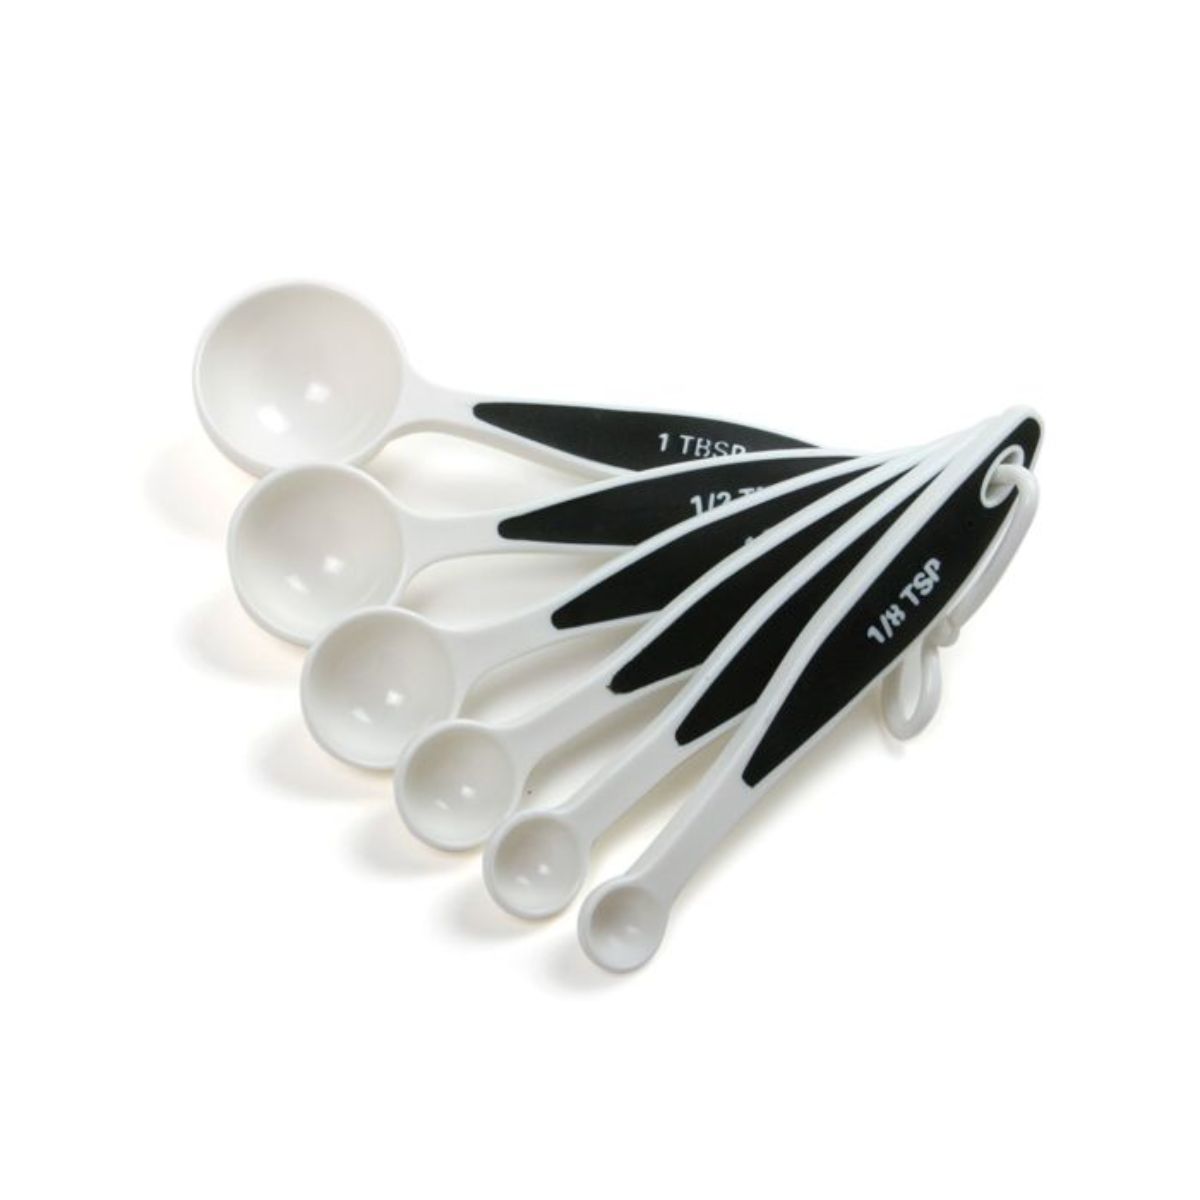 Norpro Grip-EZ Measuring Spoons Set of 6